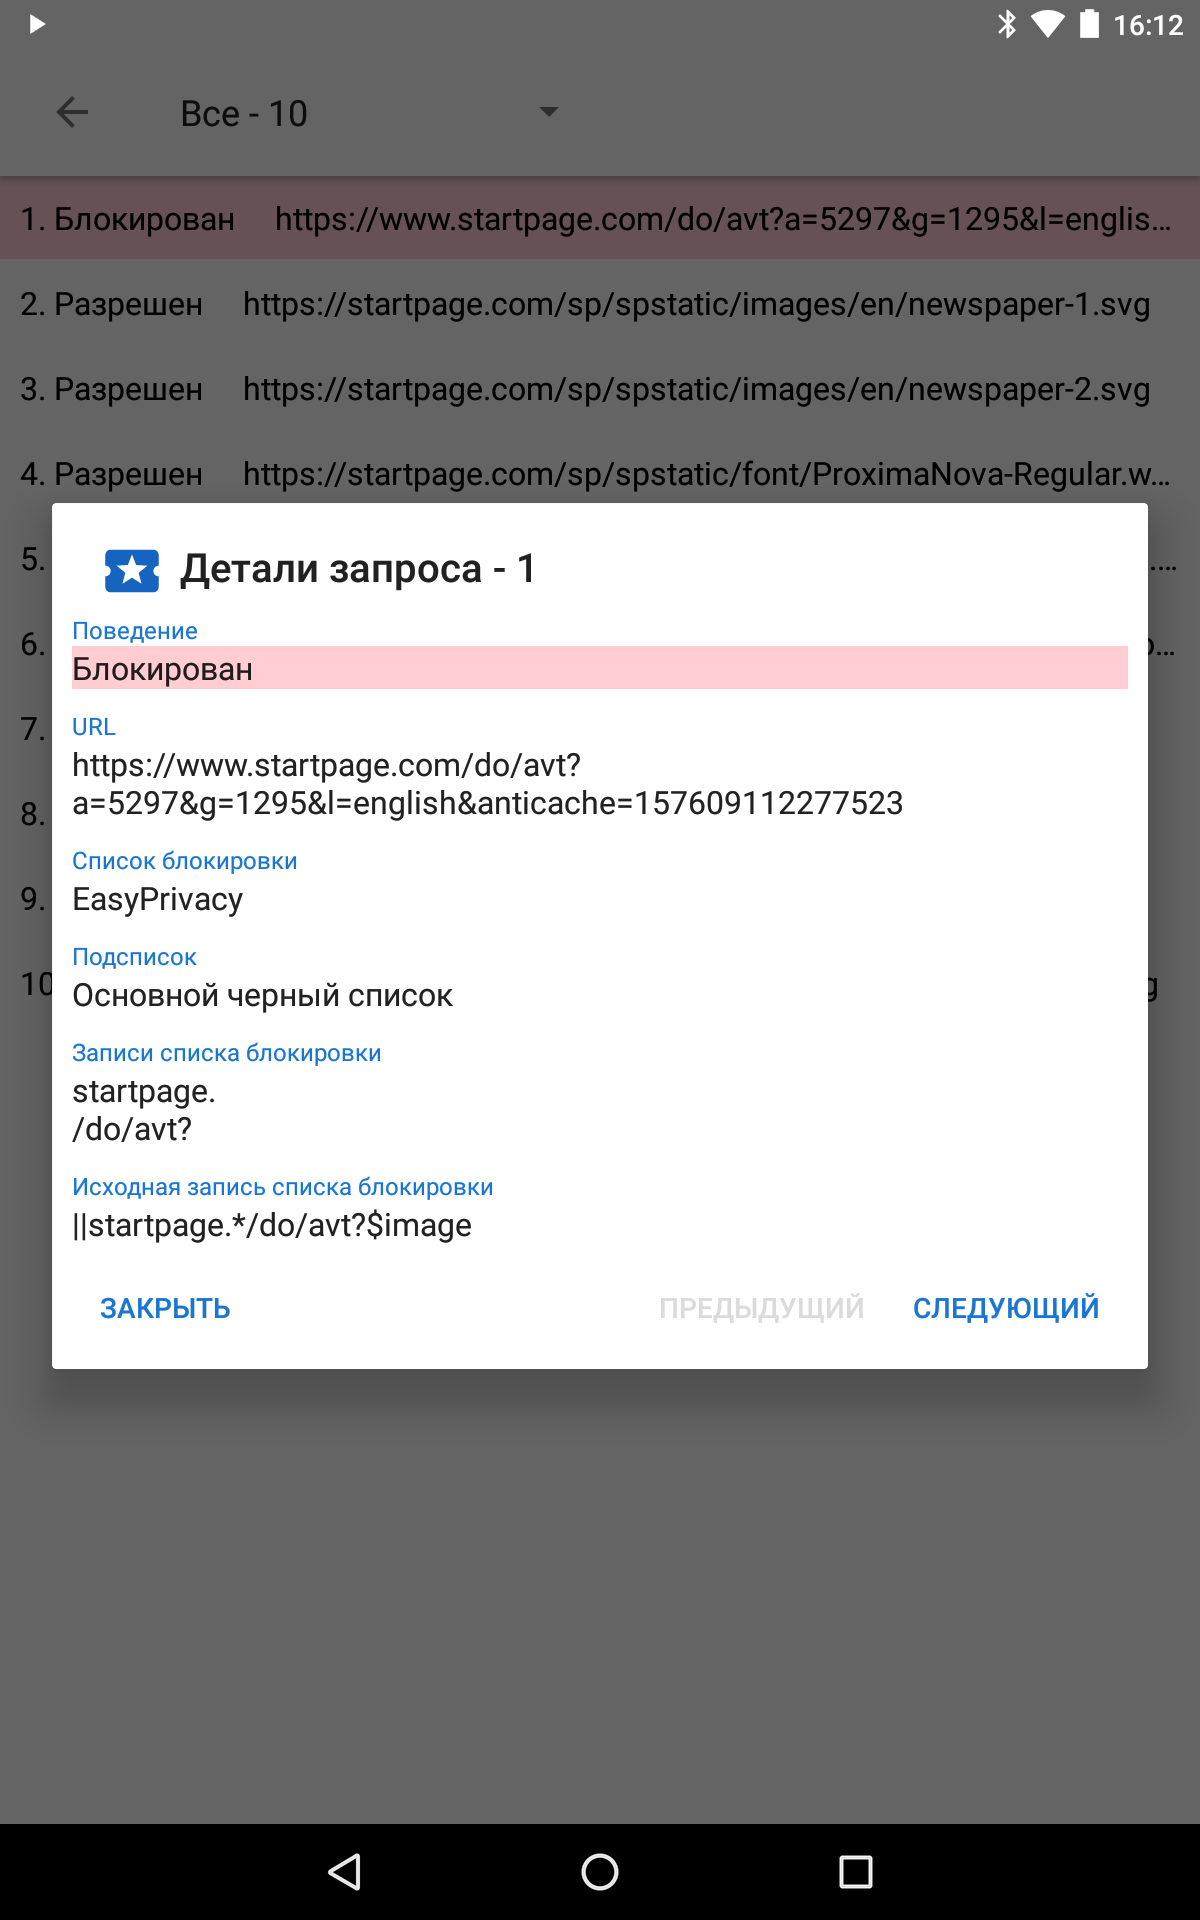 fastlane/metadata/android/ru-RU/images/phoneScreenshots/05-7-InchTabletRequestDetails.png